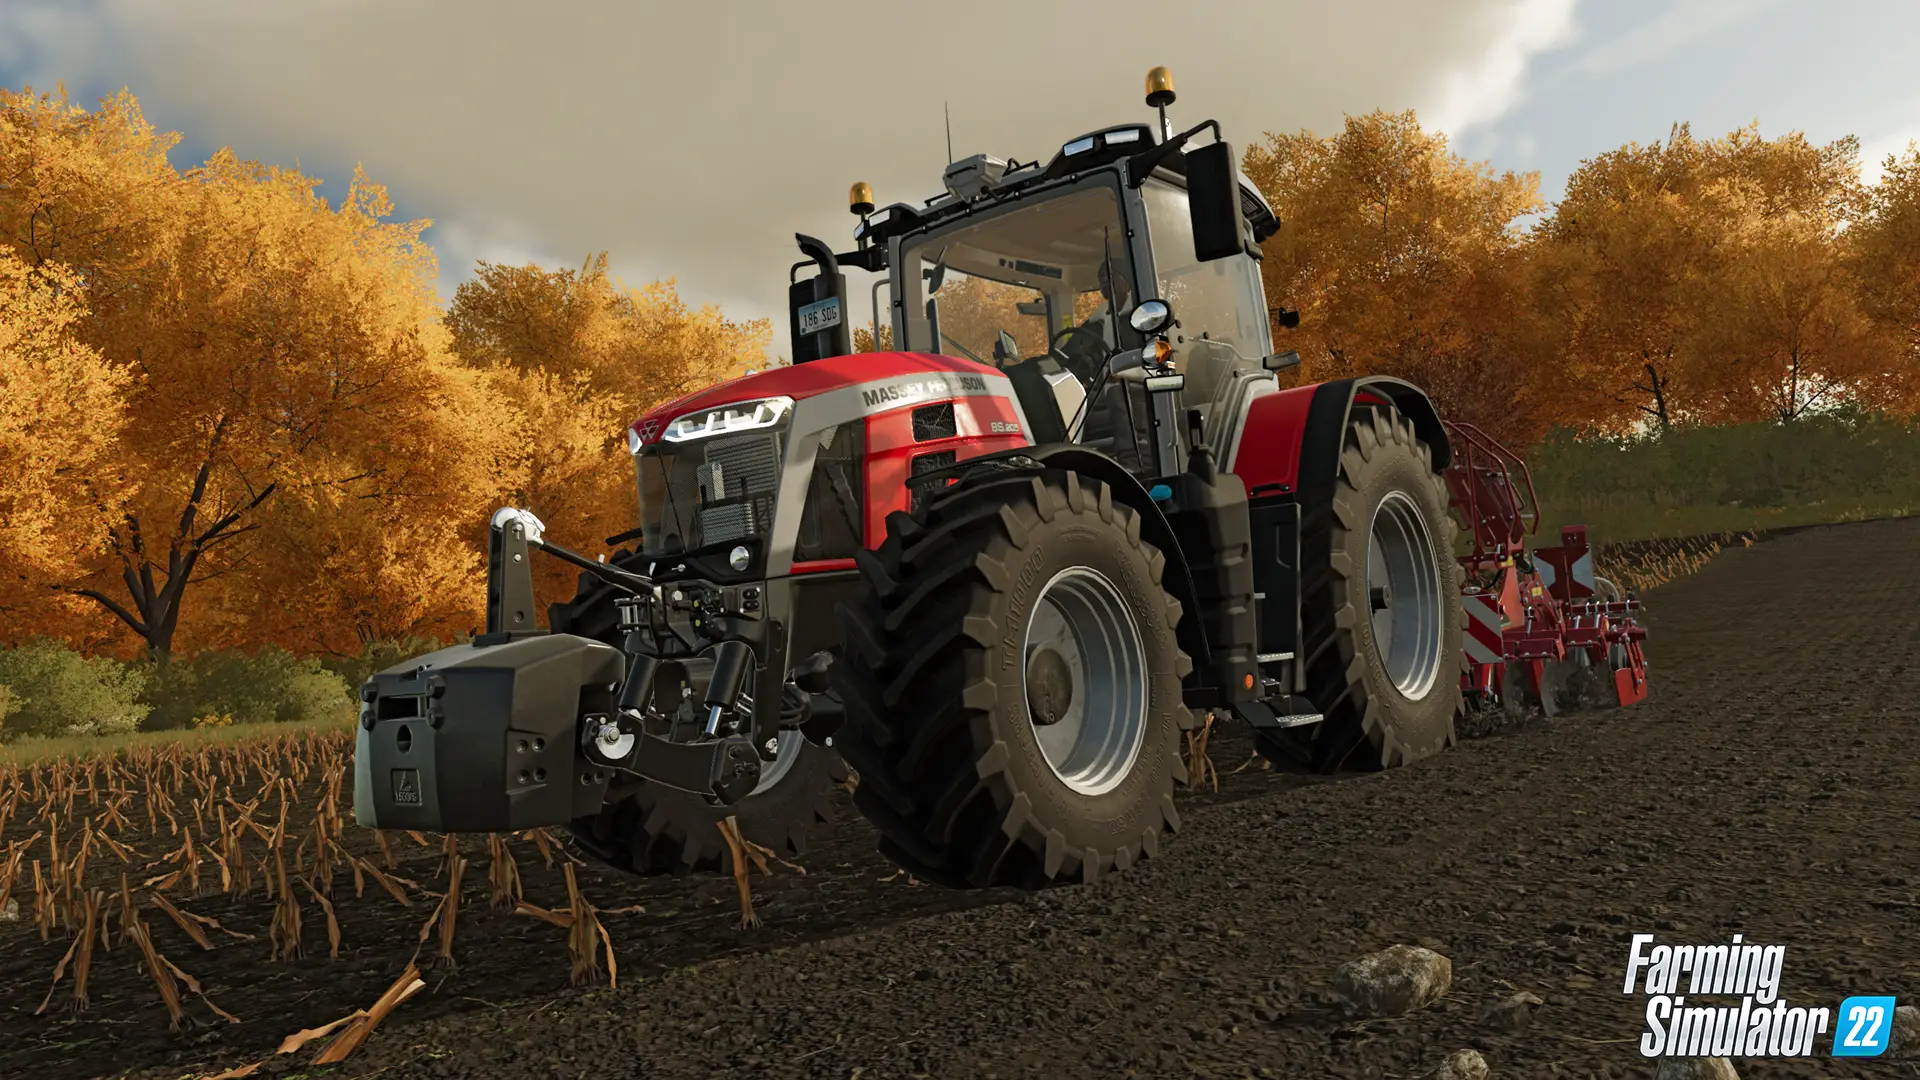 Machines de Farming Simulator 22 